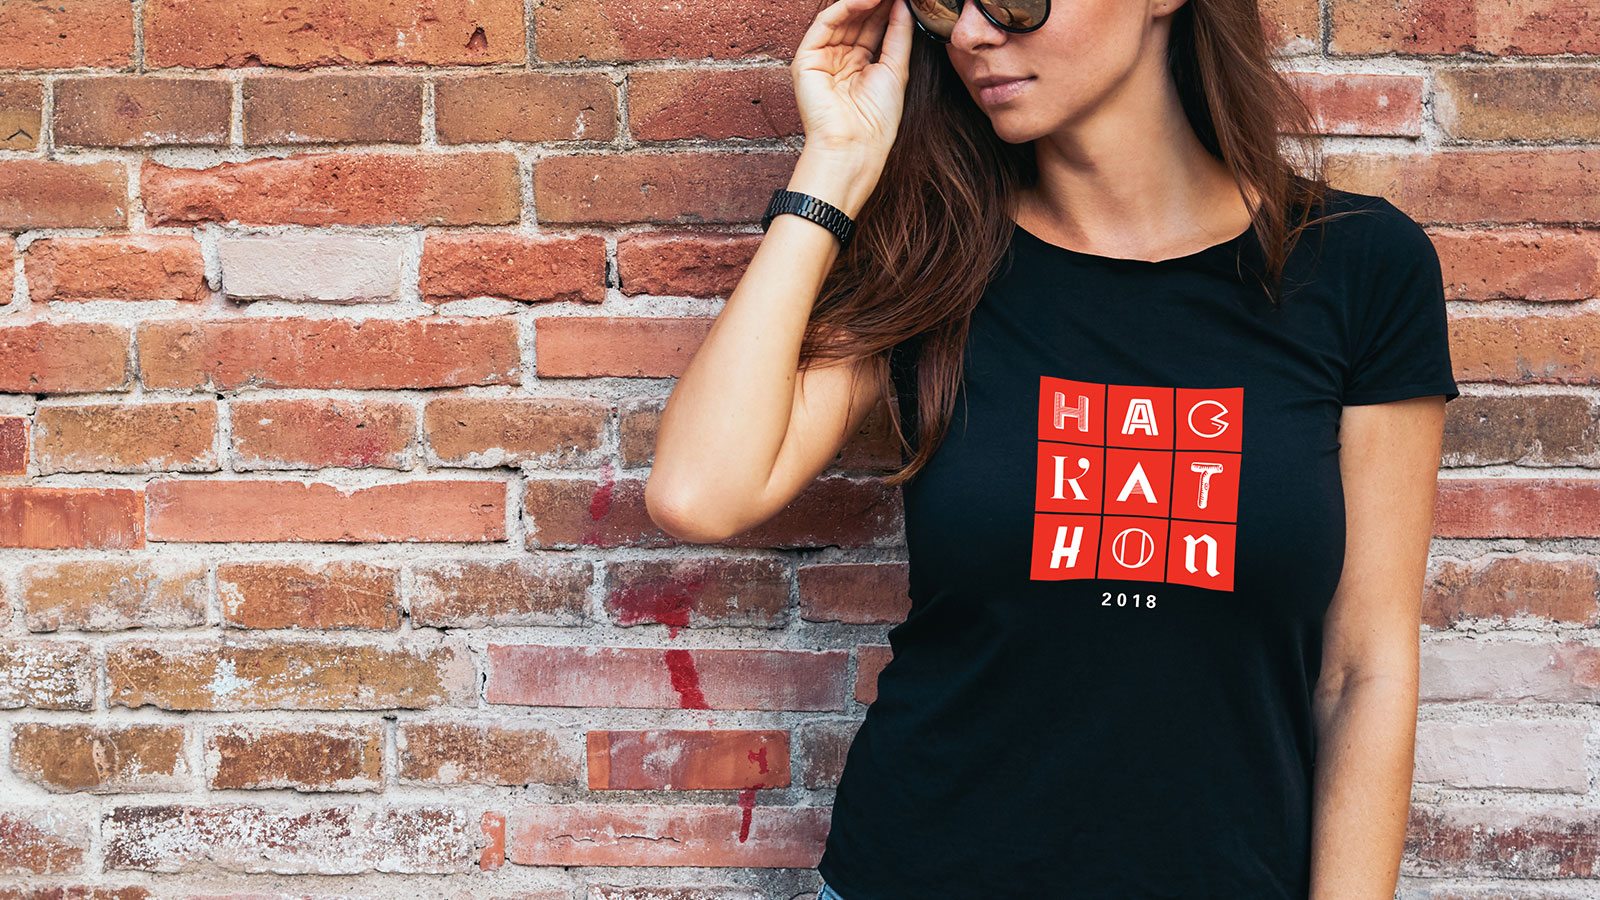 Oracle Data Cloud – Hackathon 2018: Woman Wearing Typographic Grid T-Shirt Design